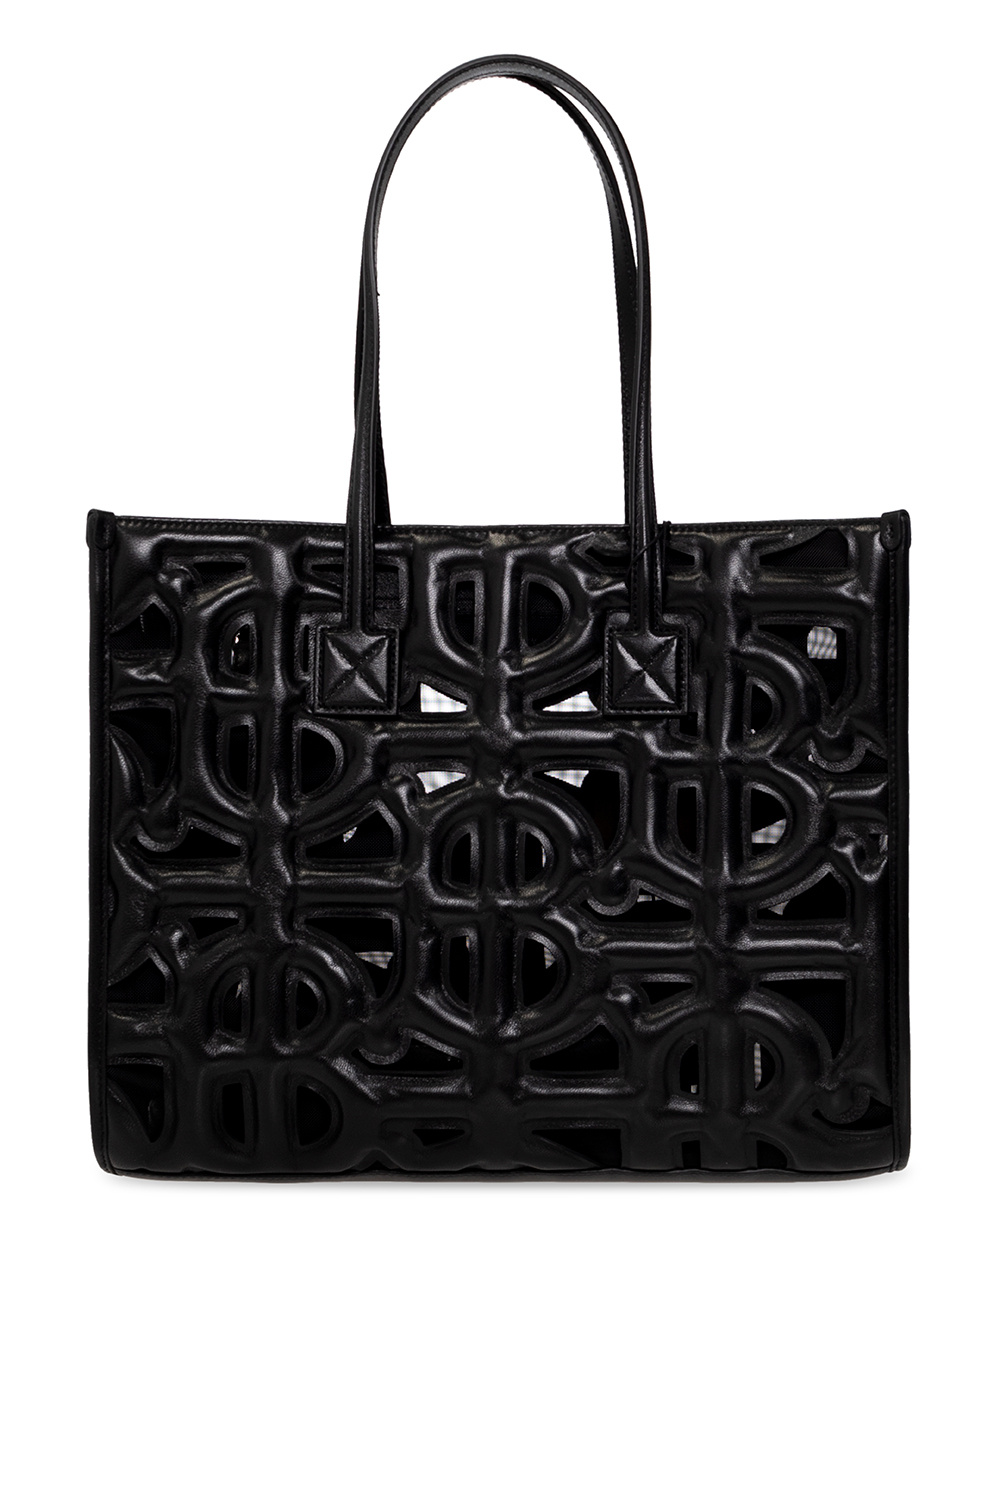 Burberry ‘Freya Small’ shopper bag